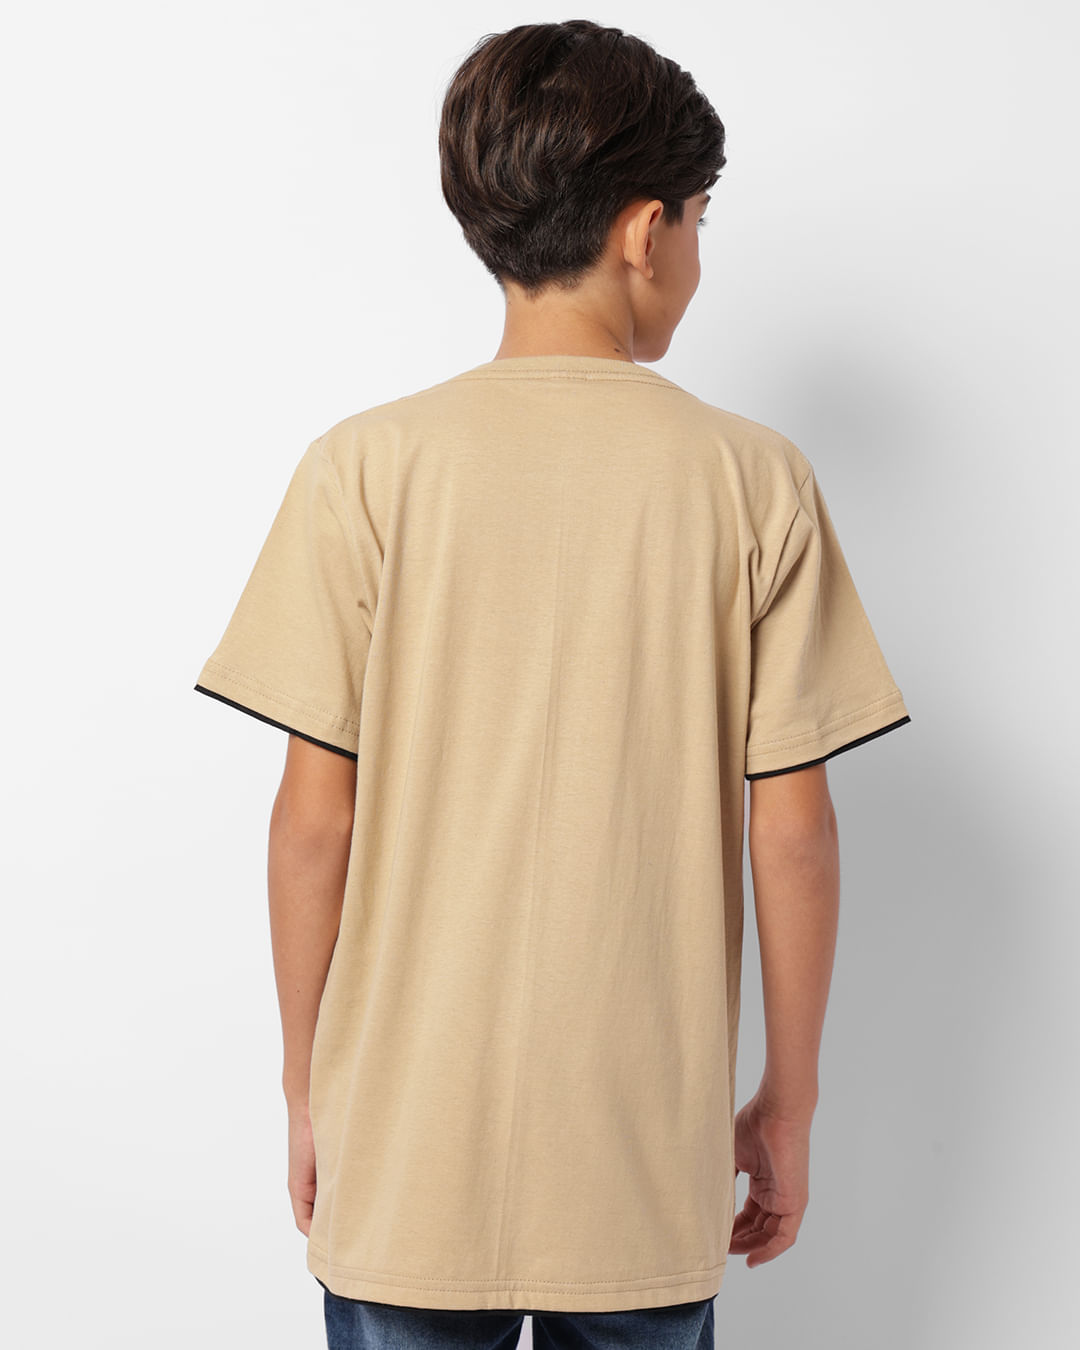 Camiseta-T36205-Mc-M1016-Street---Bege-Claro